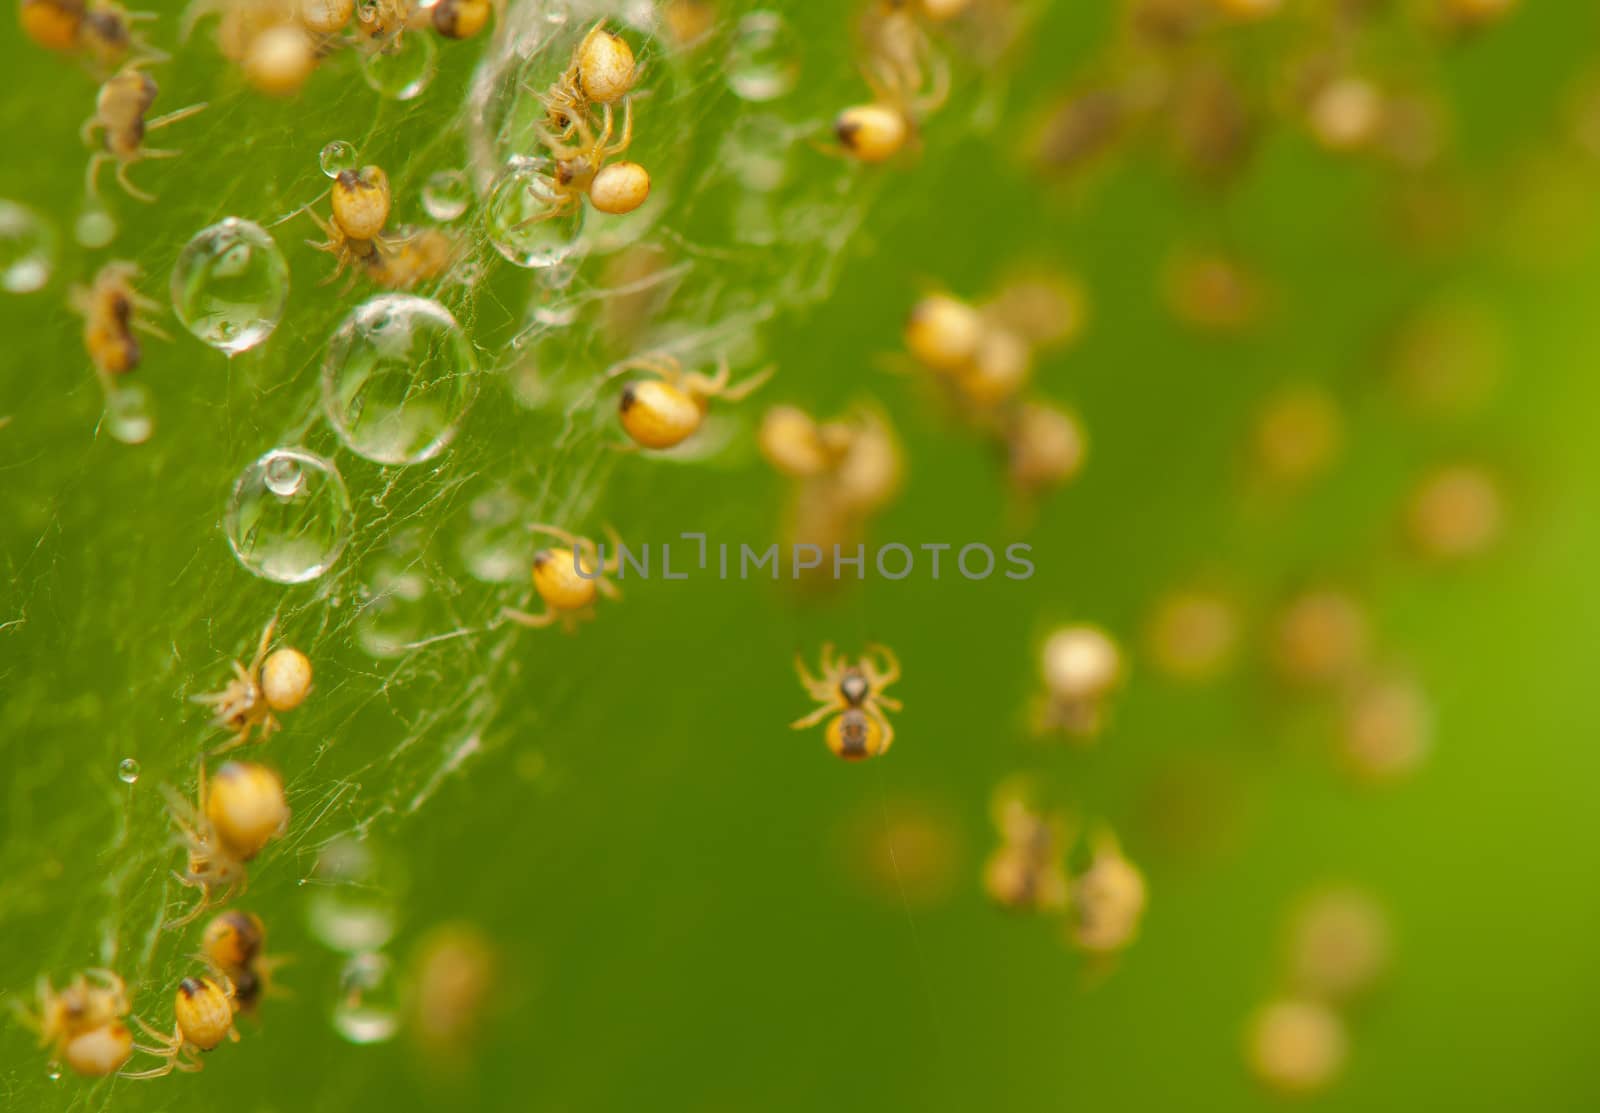 Small spiders by Gucio_55